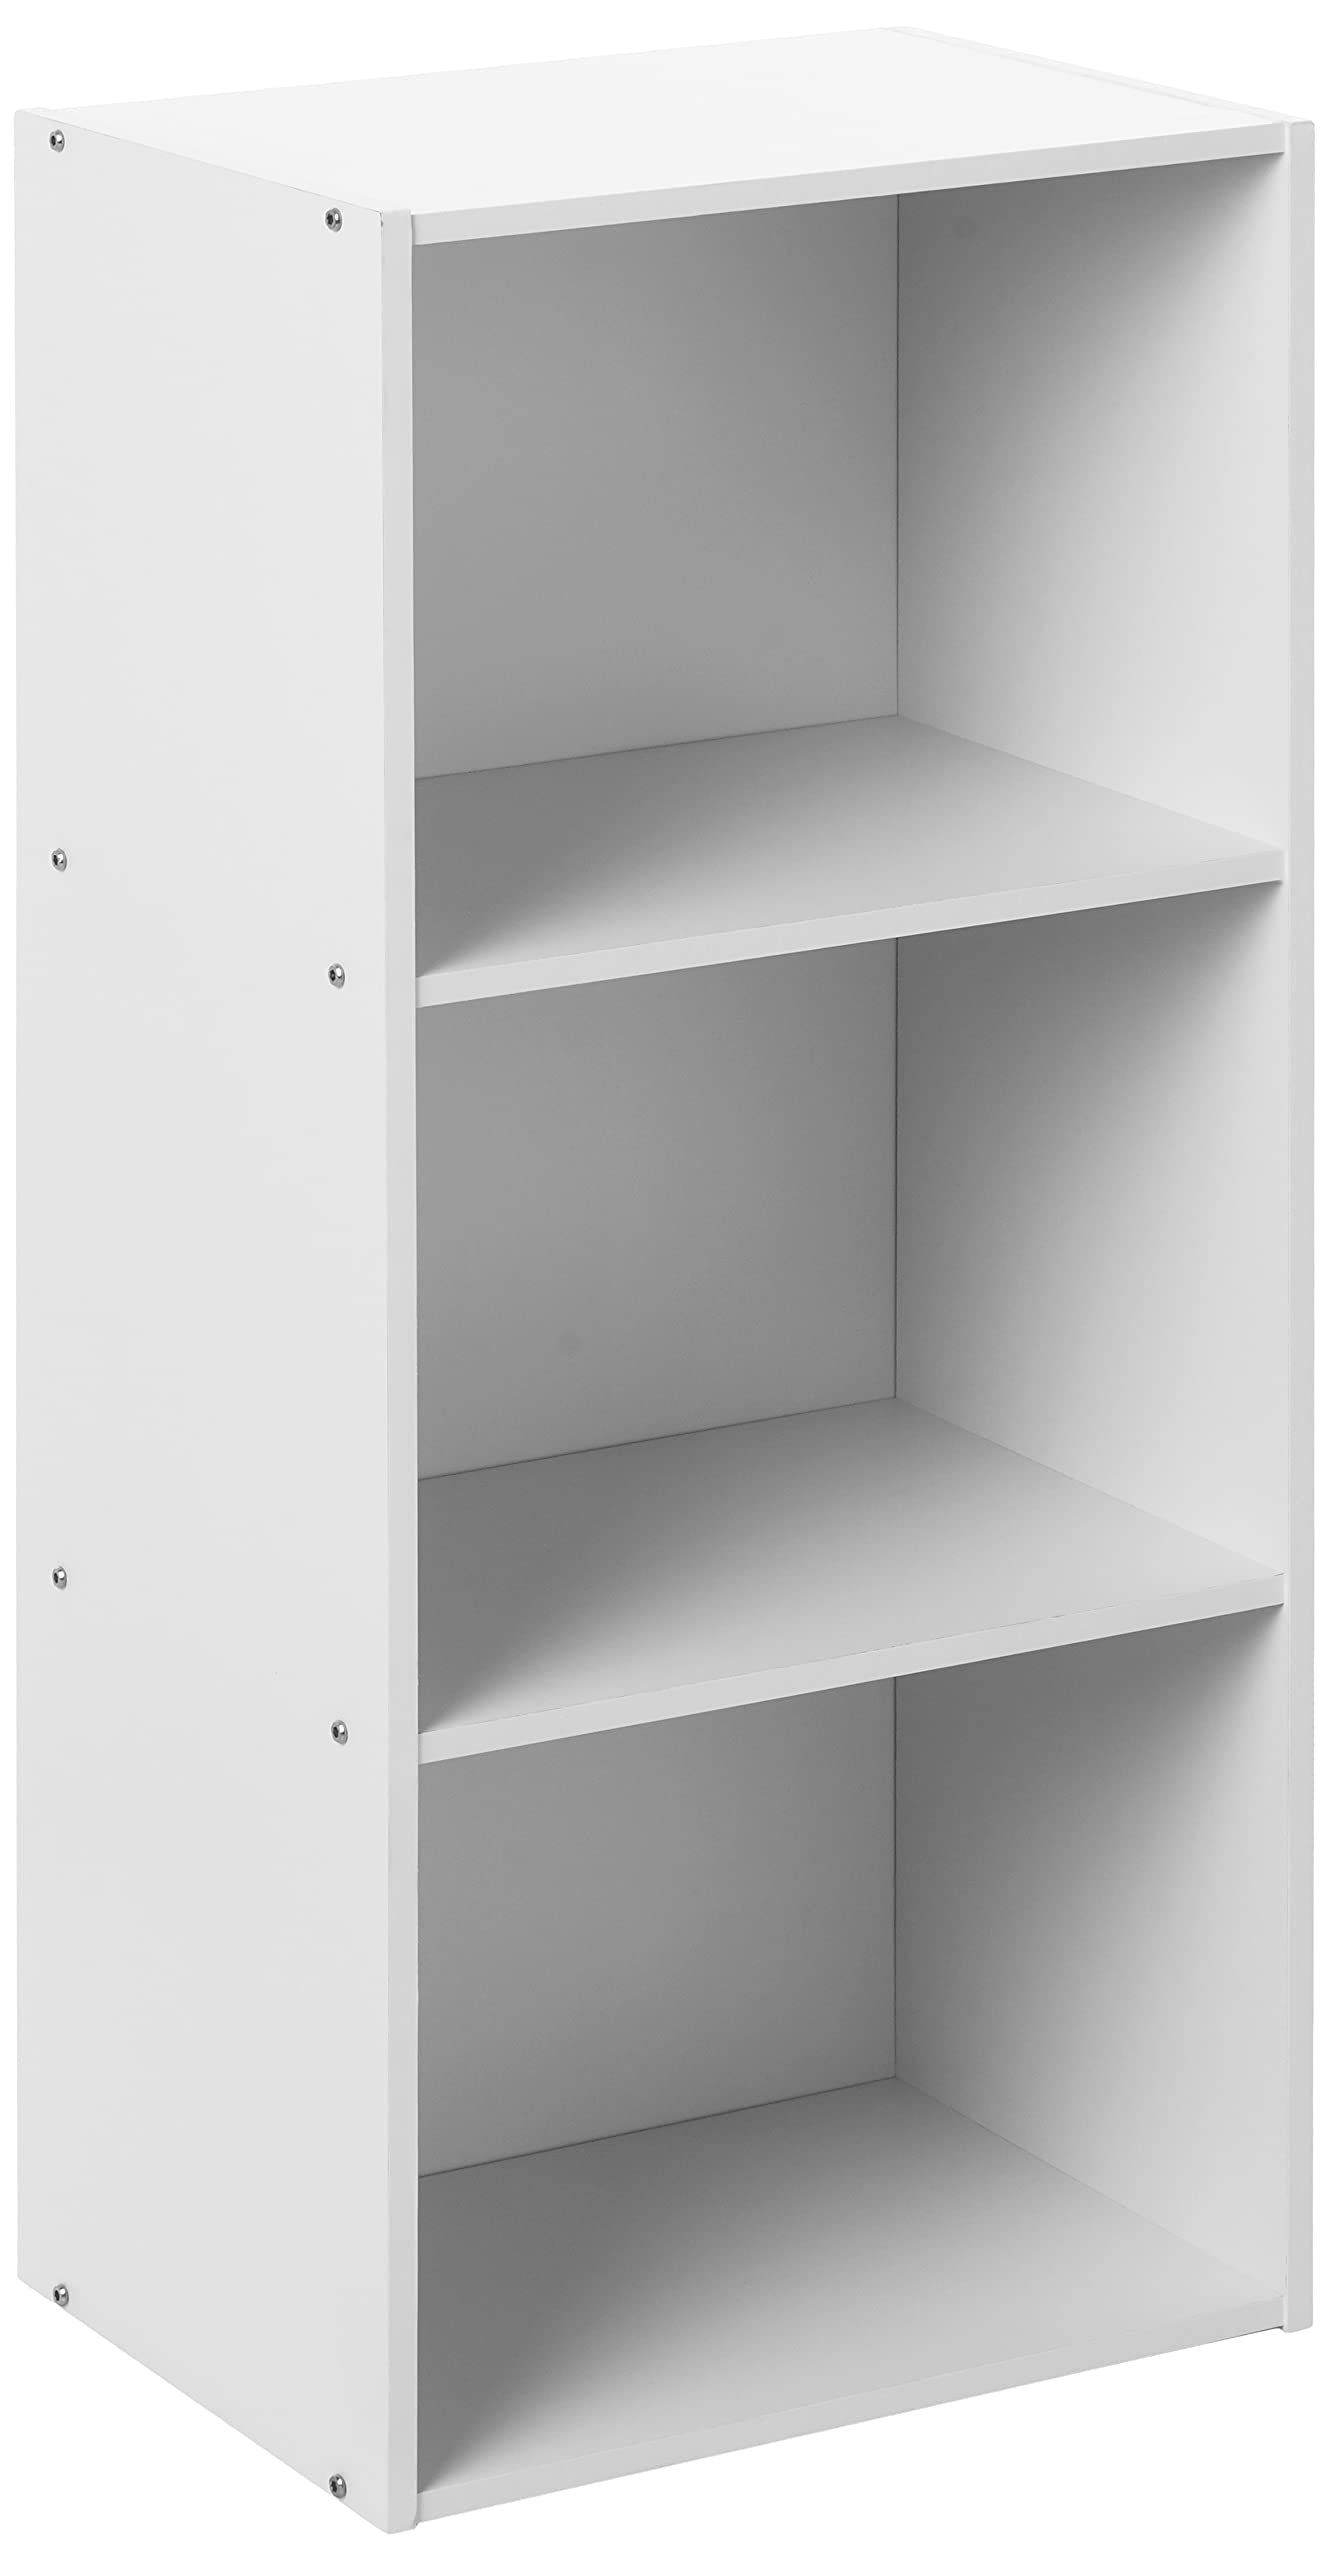 Basic 3-Tier Bookcase shelves Display Storage Shelves Home Decor Furniture